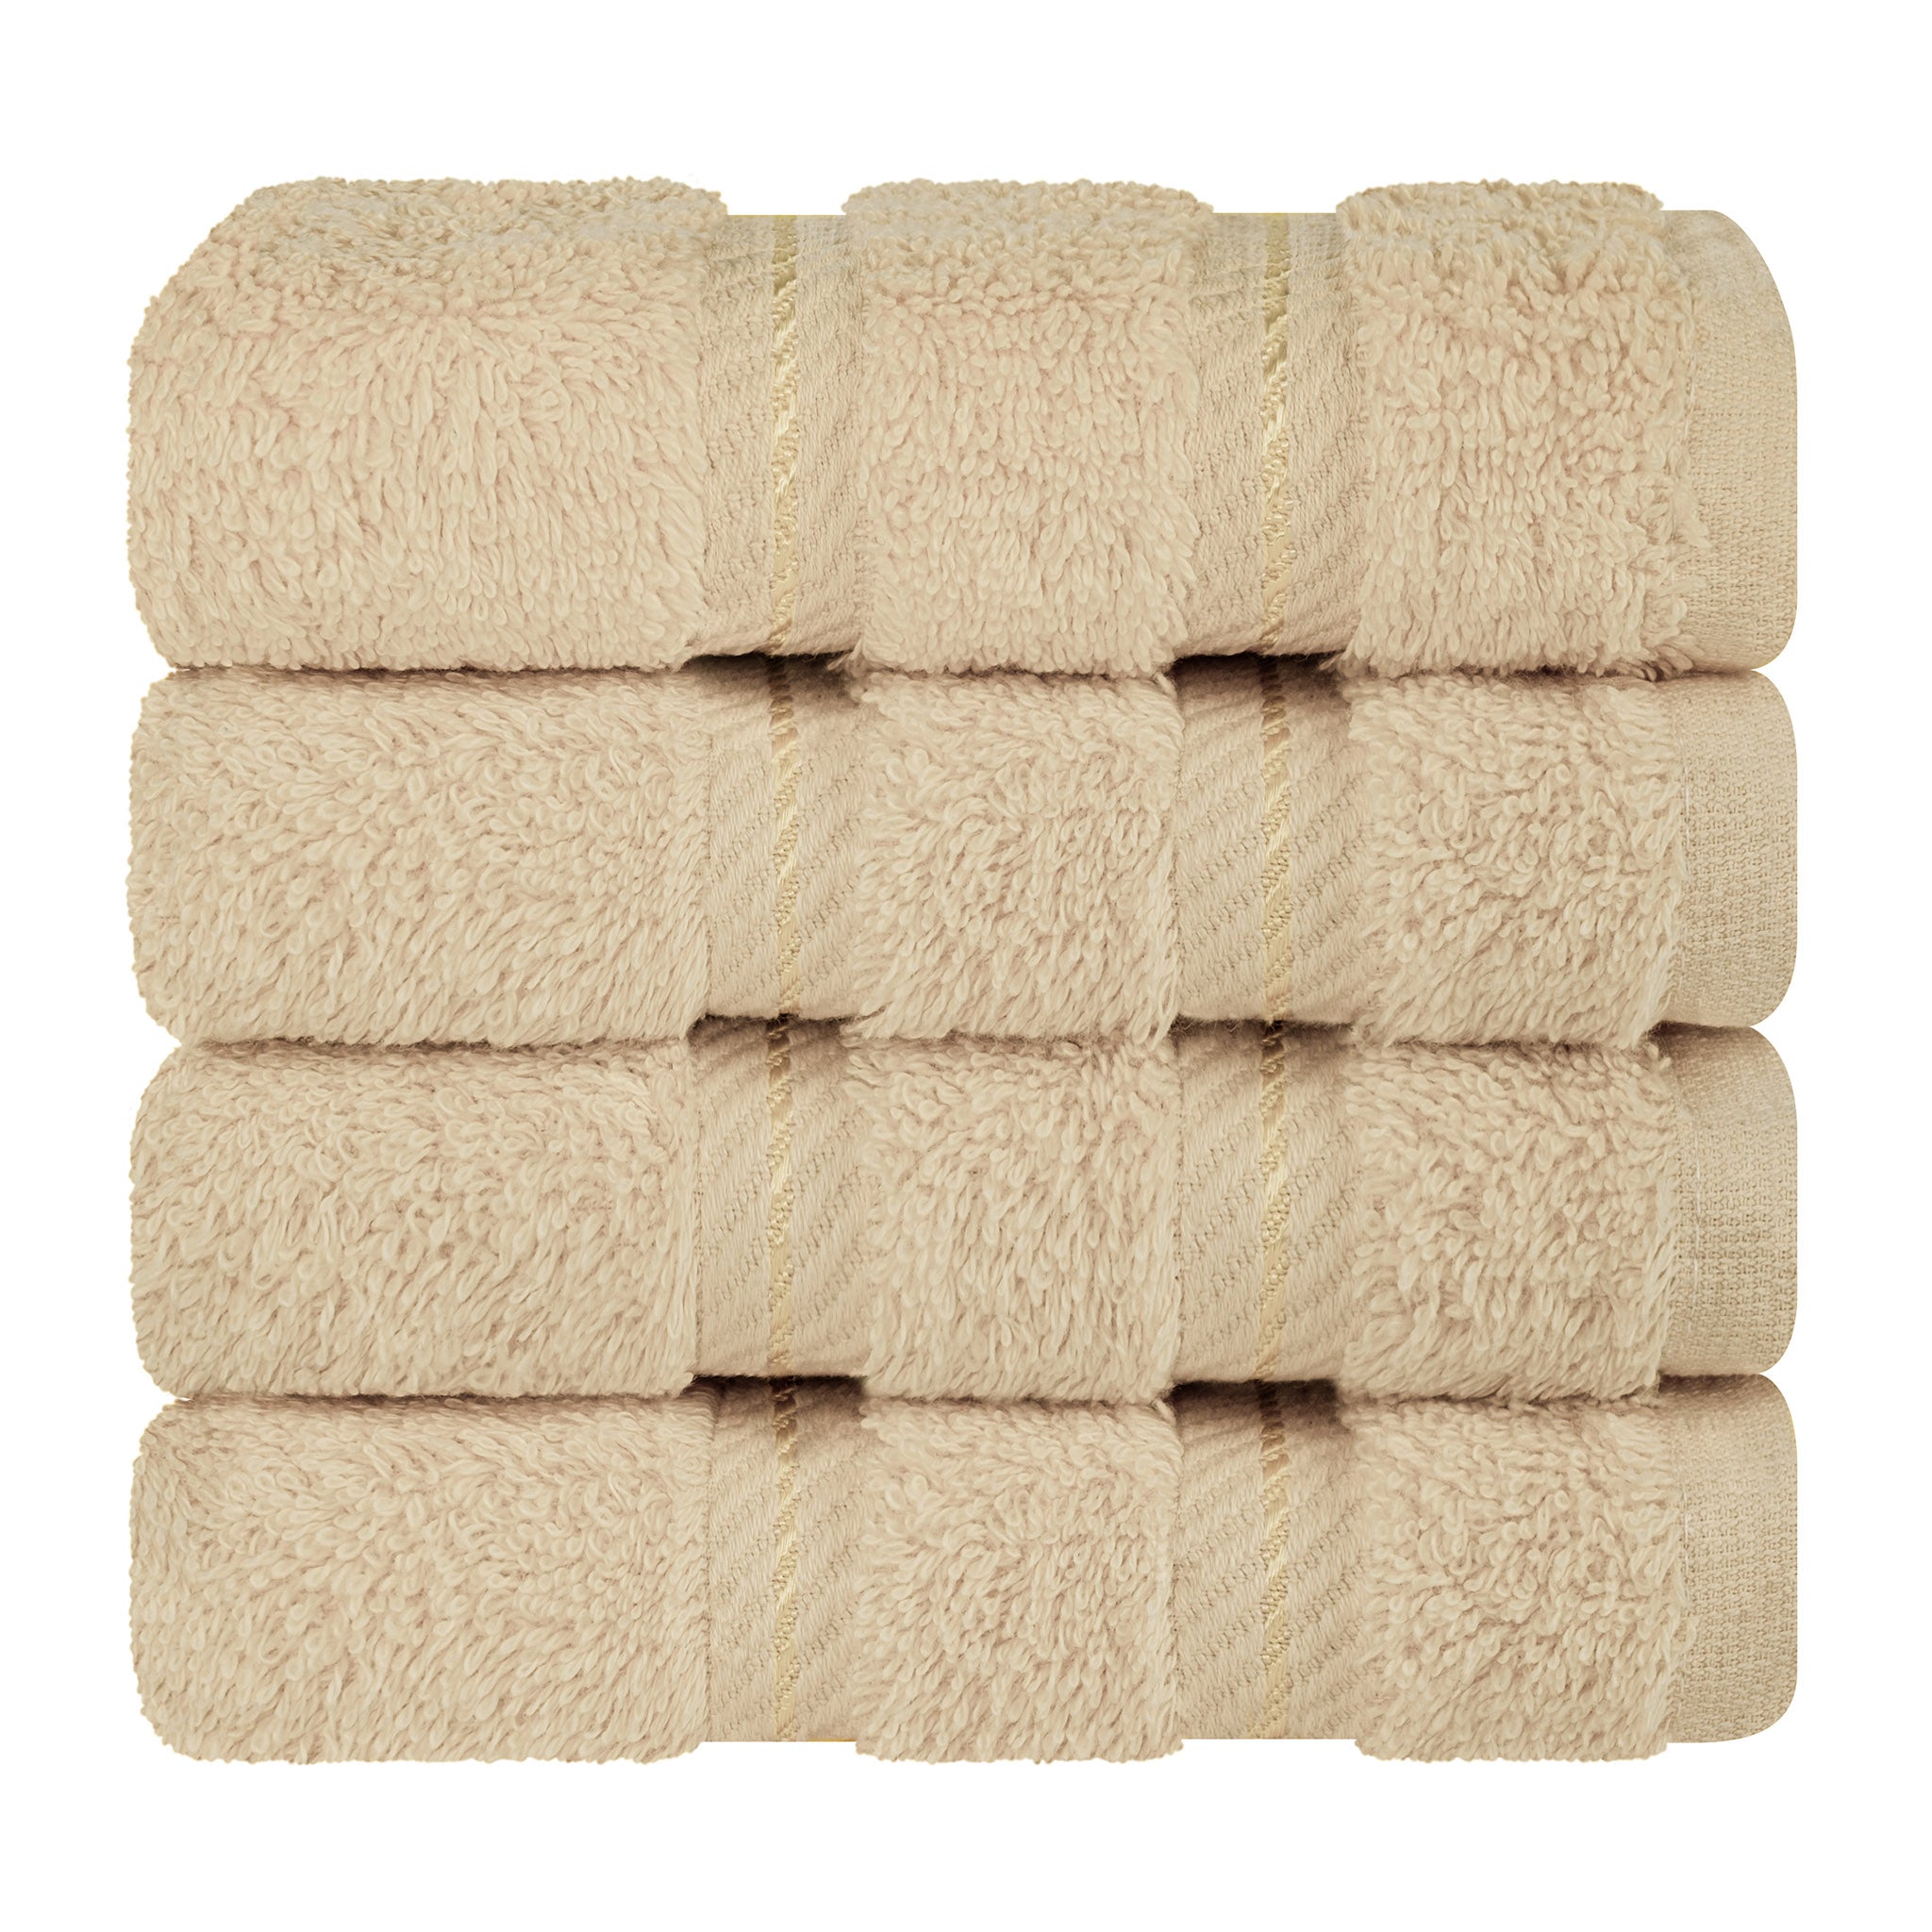  American Soft Linen 100% Turkish Cotton 4 Piece Washcloth Set - Wholesale - sand-taupe-7